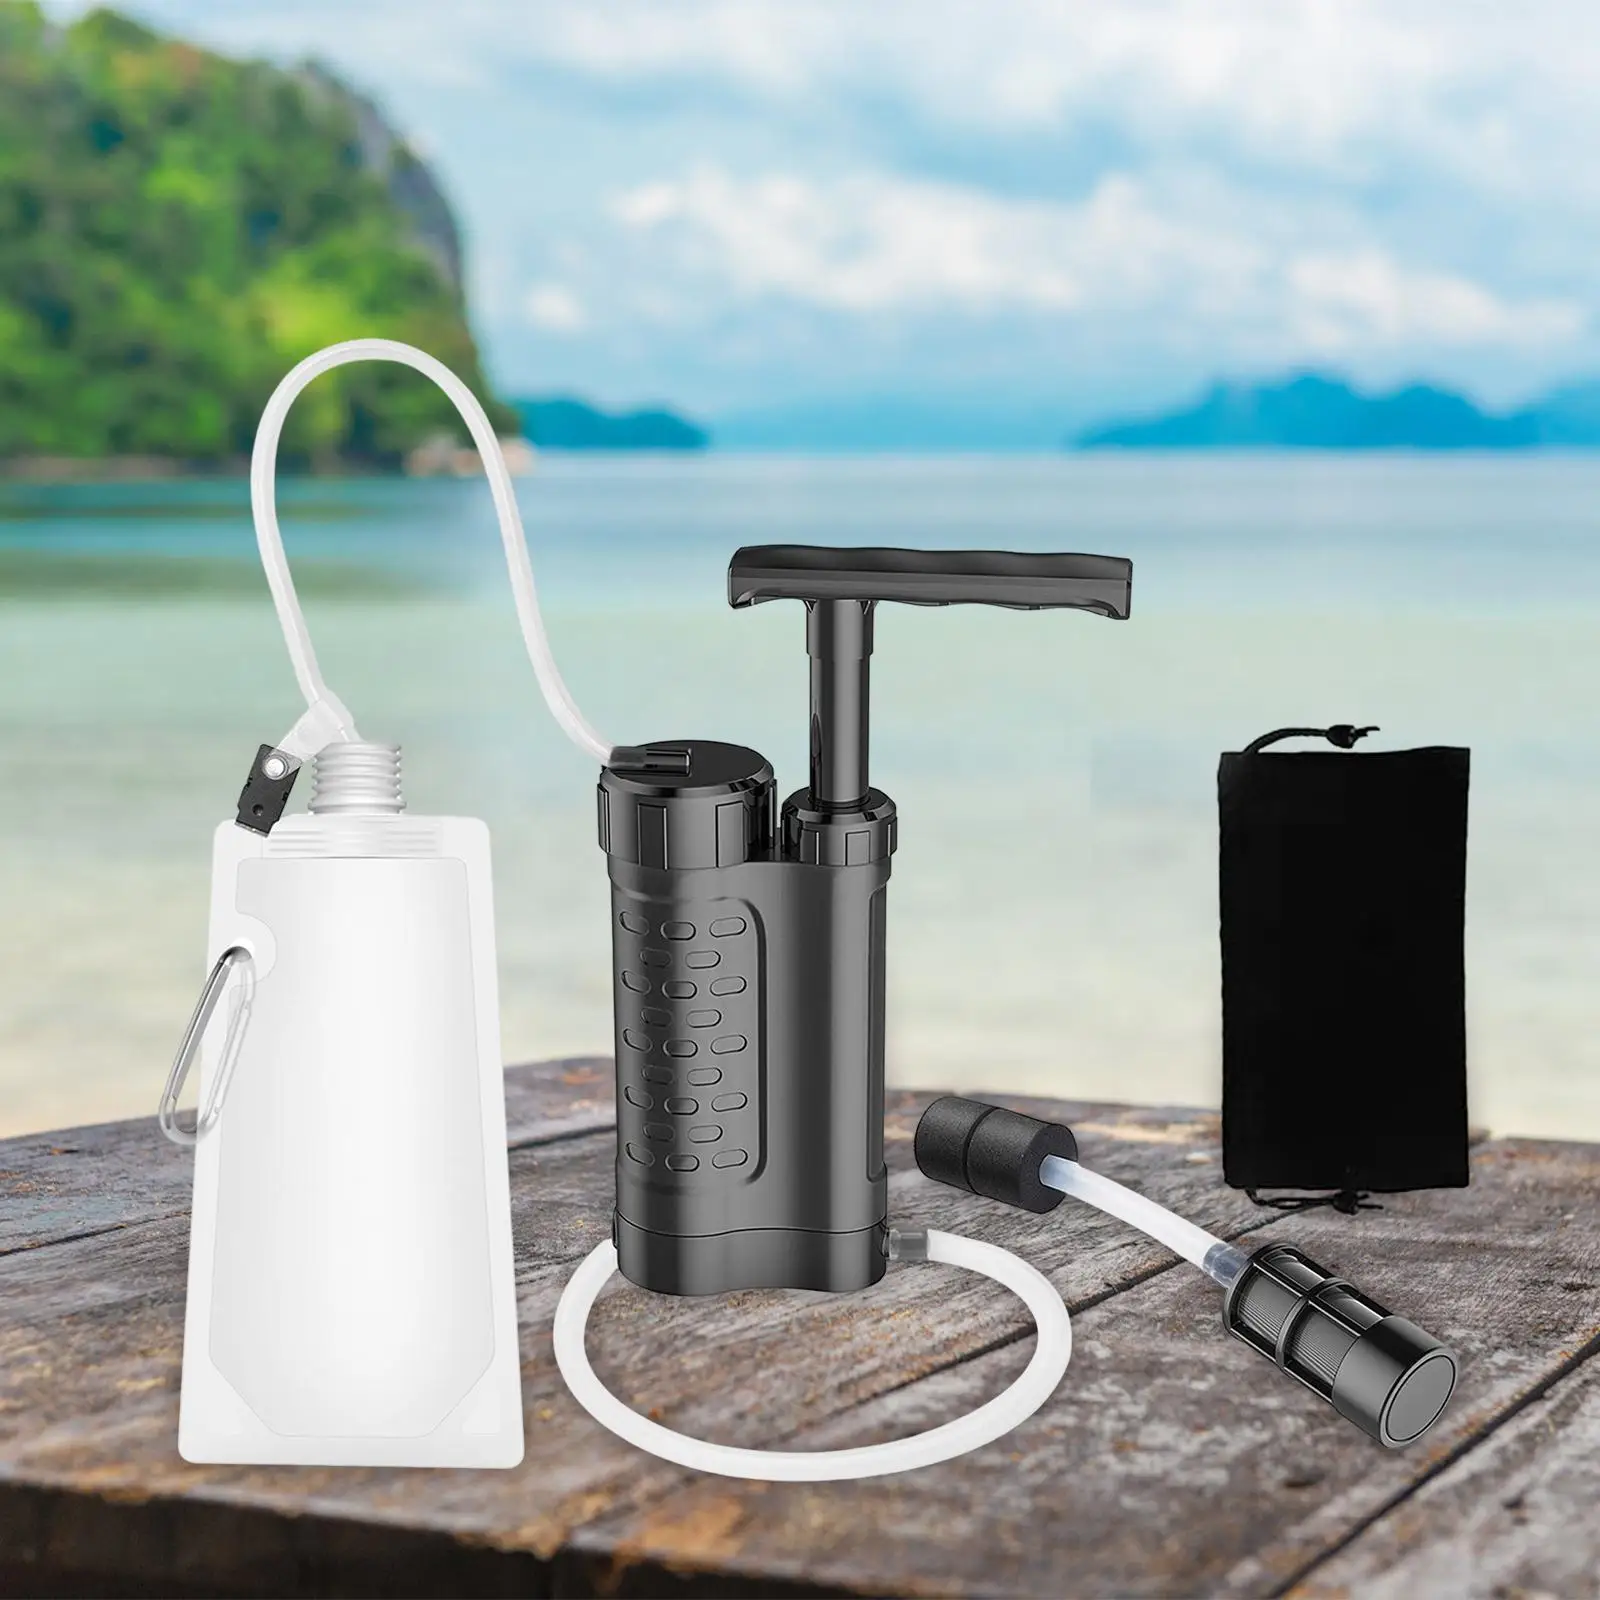 Water Purifier Pump Emergency Preparedness Survival Gear for Outdoor Travel Hiking